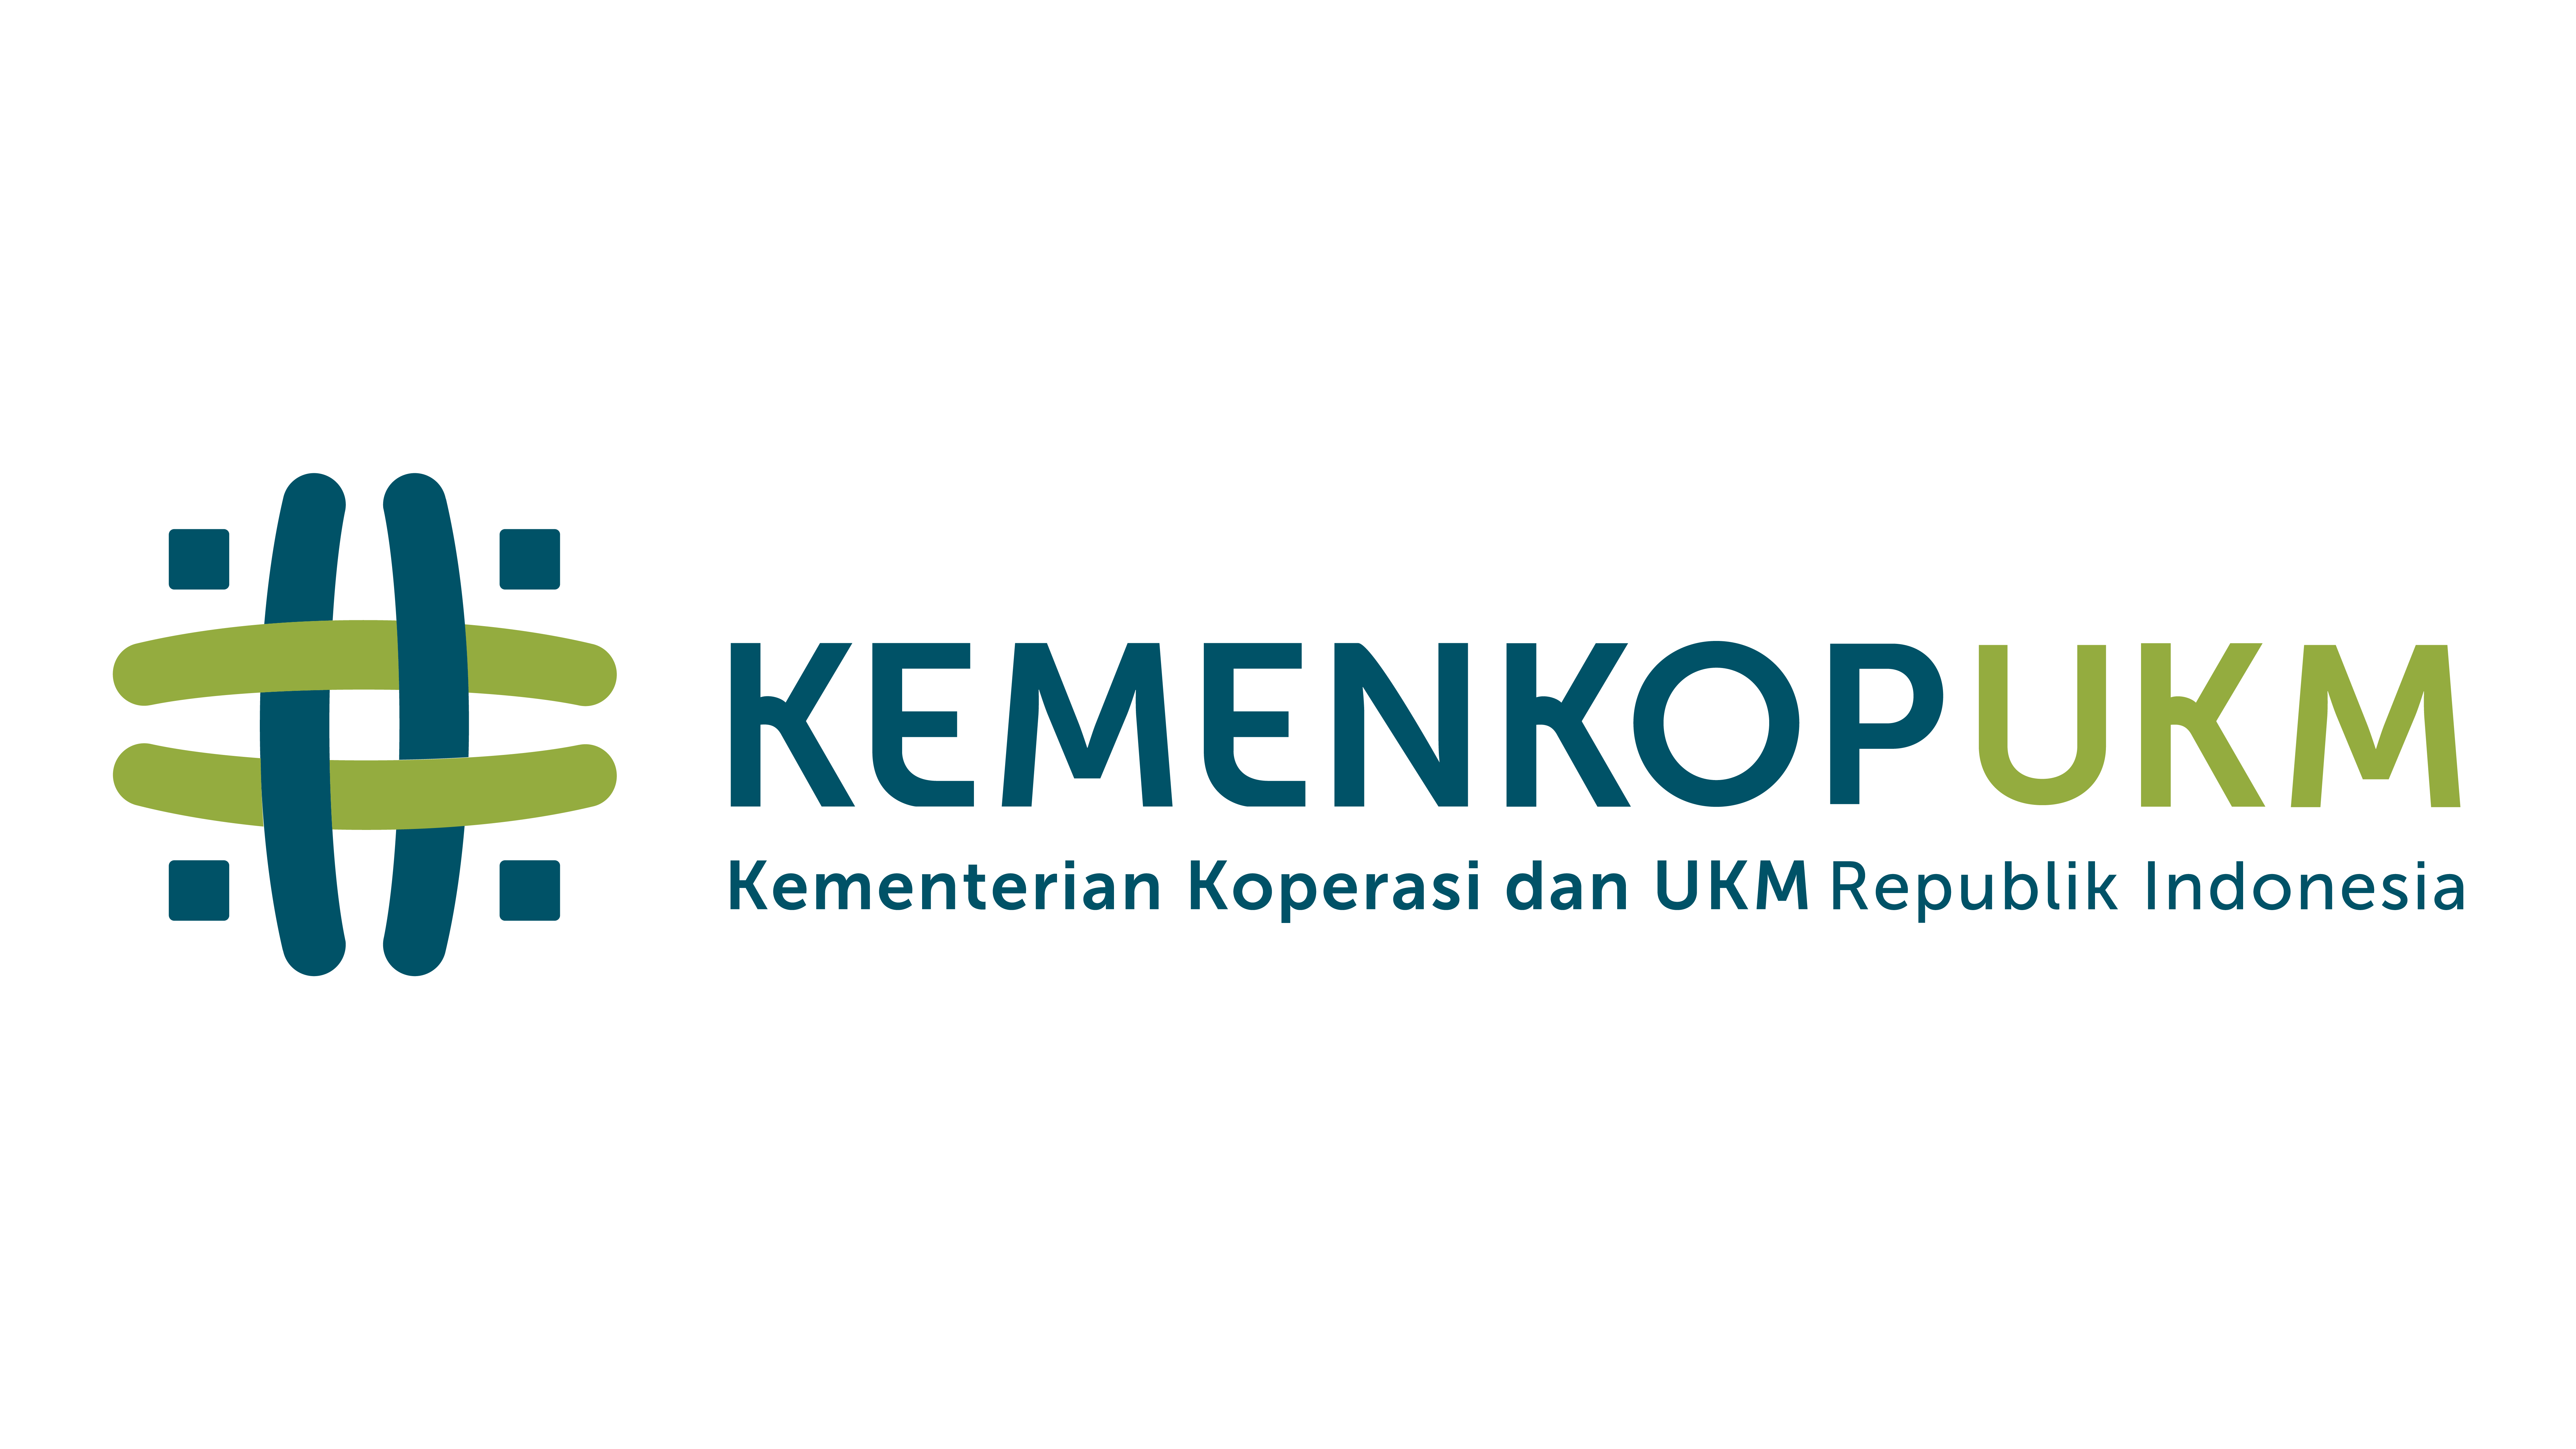 Copy of logo kemenkopukm new-02